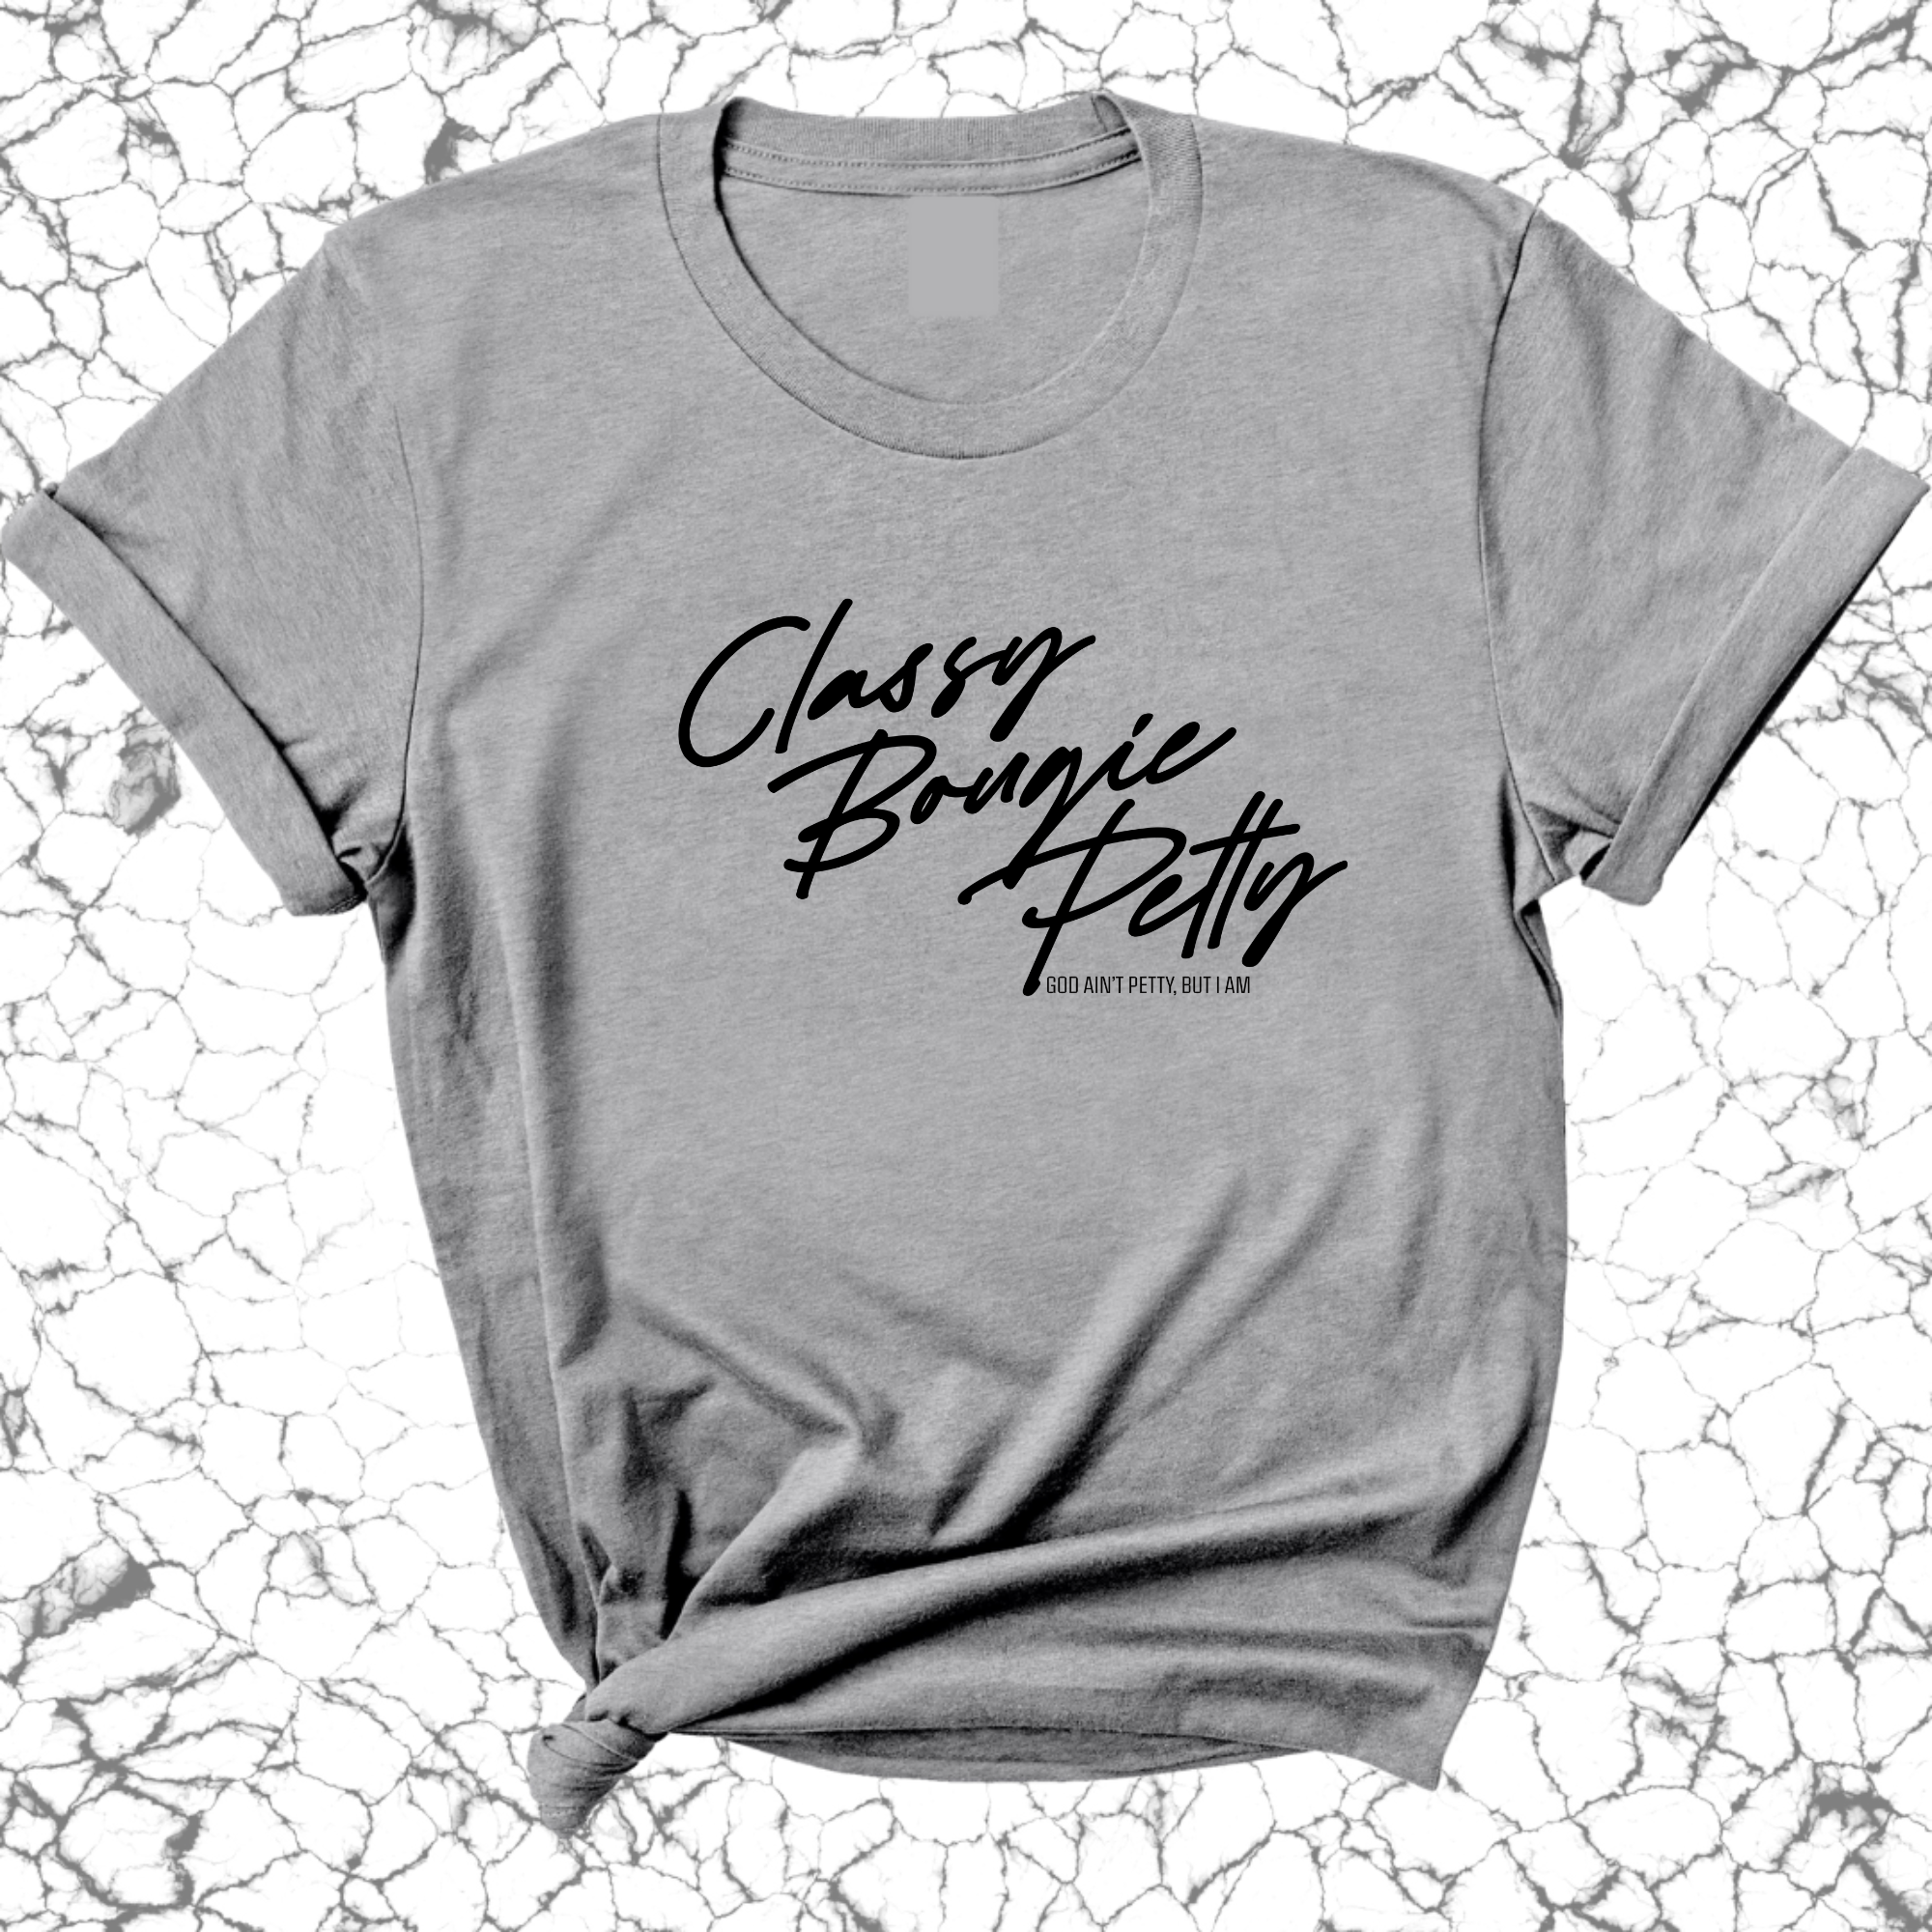 Classy Bougie Petty Unisex Tee-T-Shirt-The Original God Ain't Petty But I Am